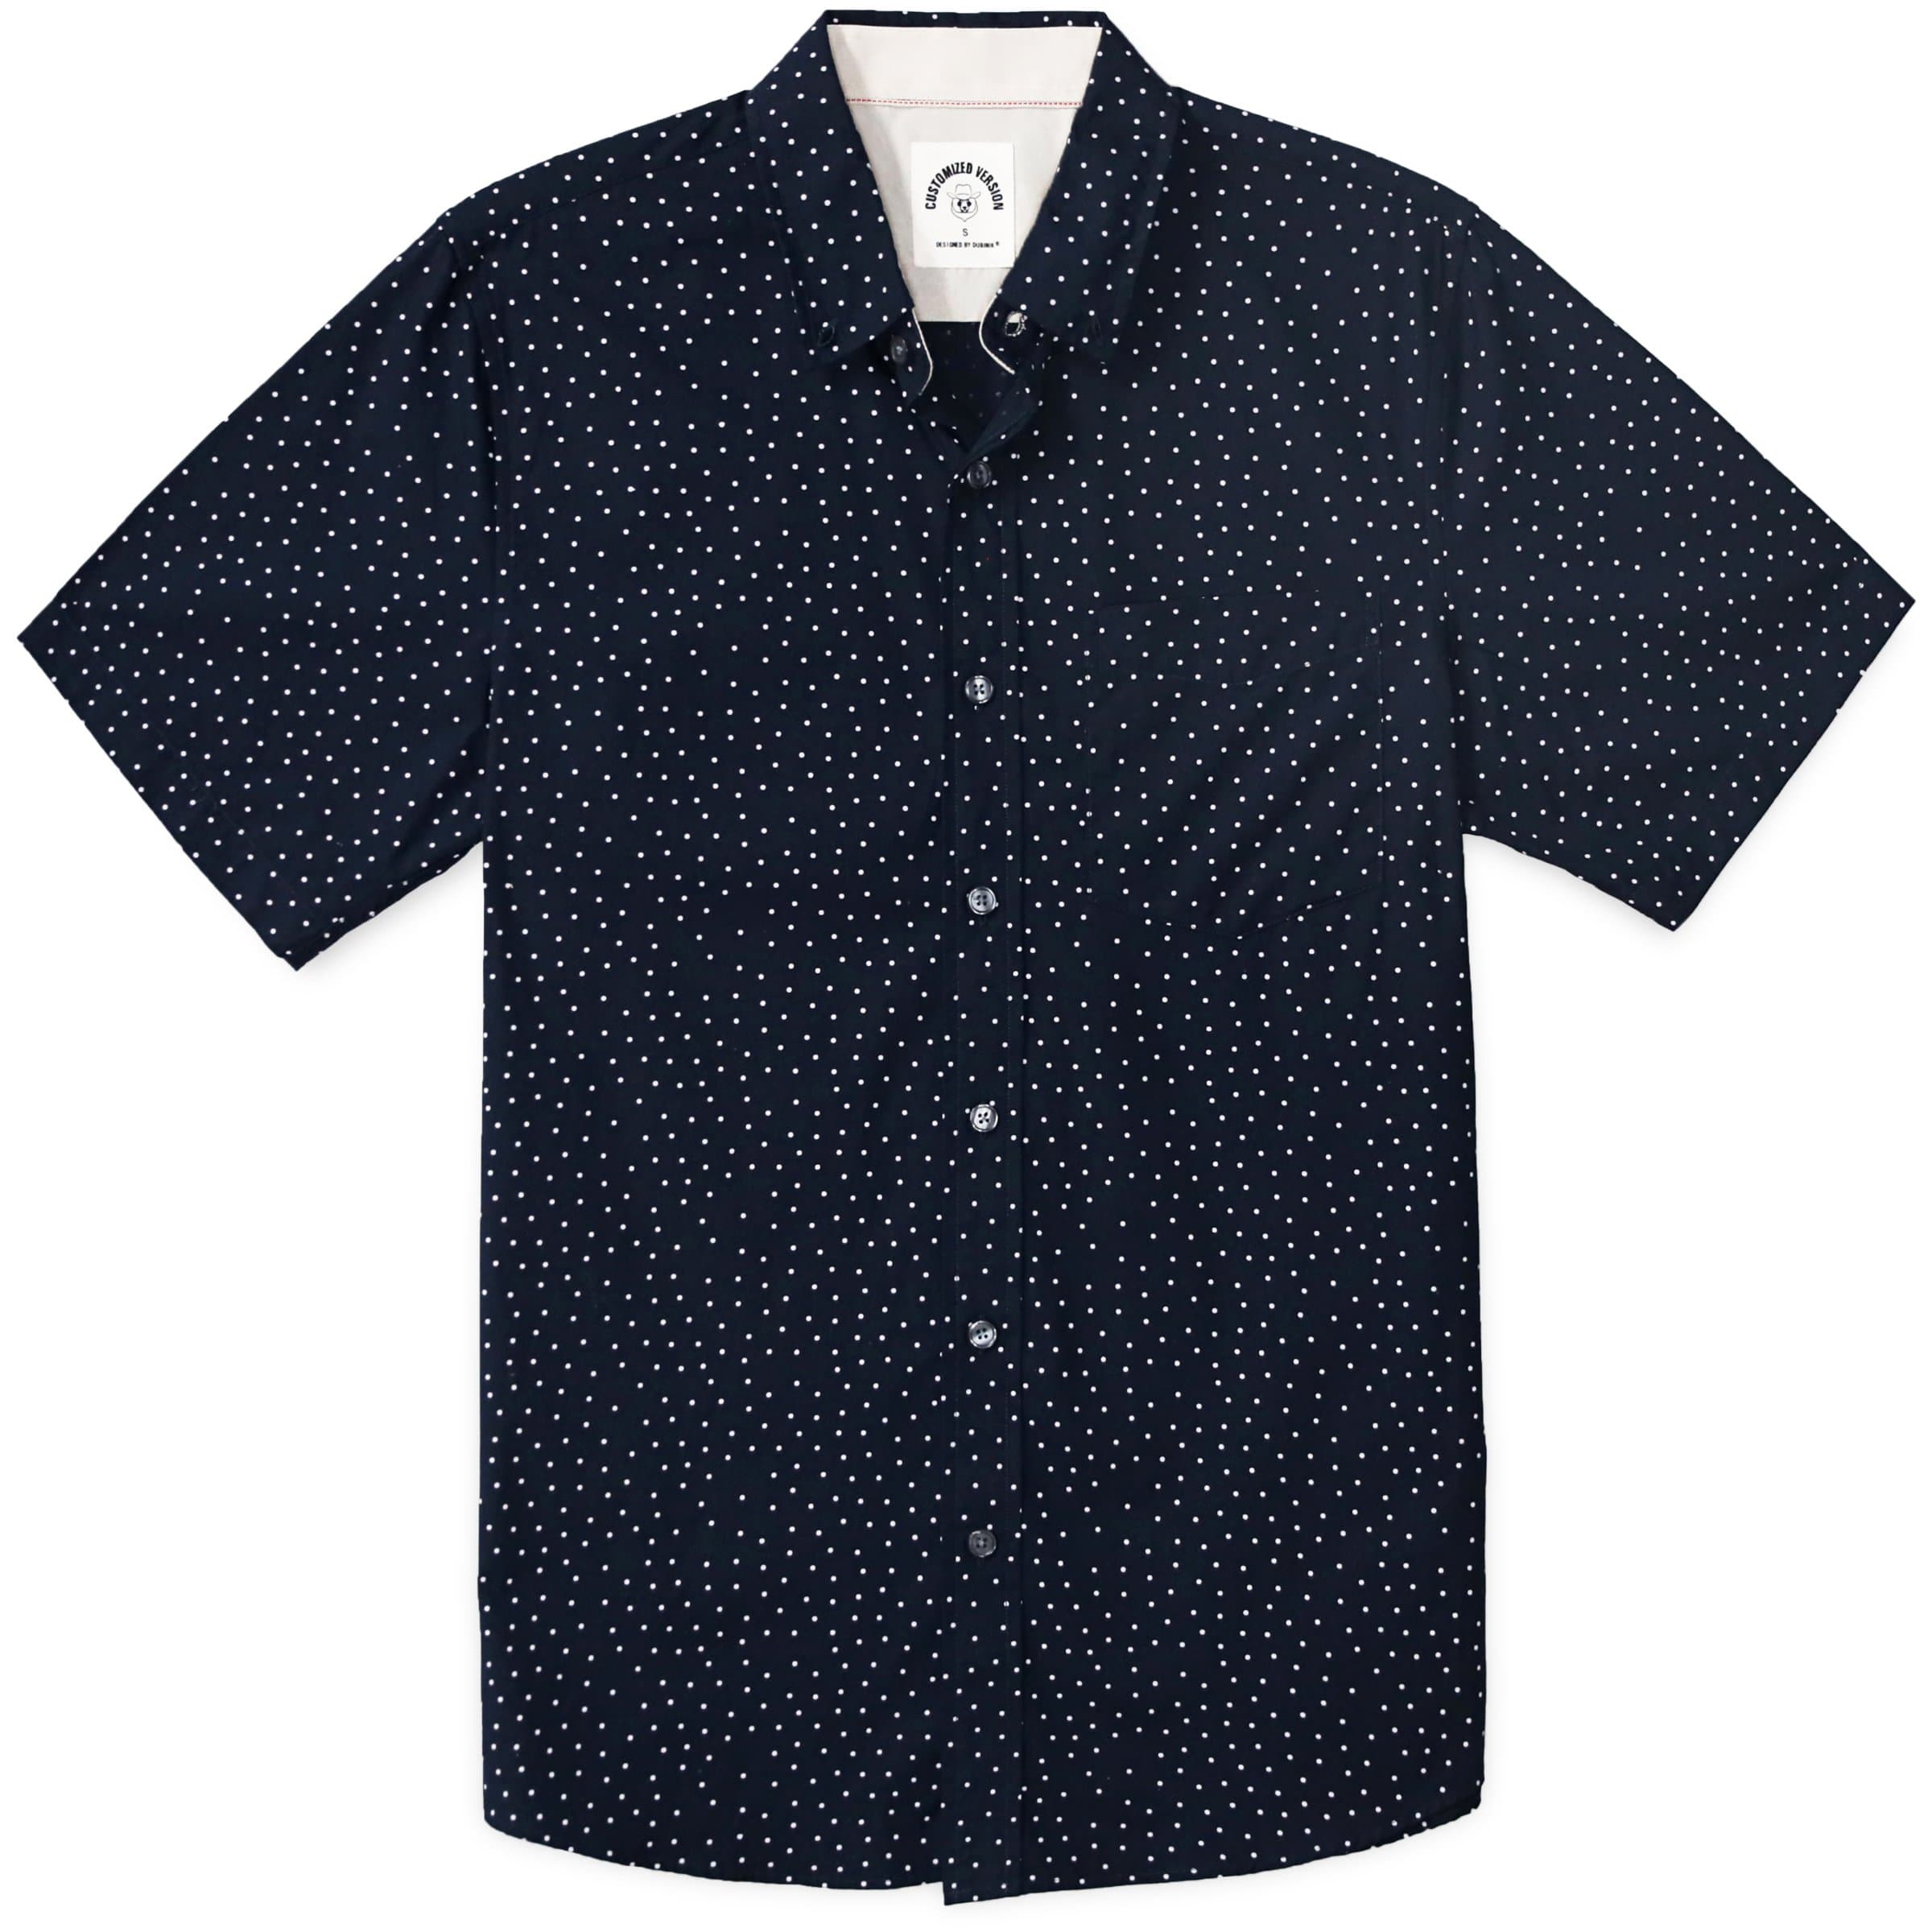 Men's casual short-sleeved cotton shirt #0102